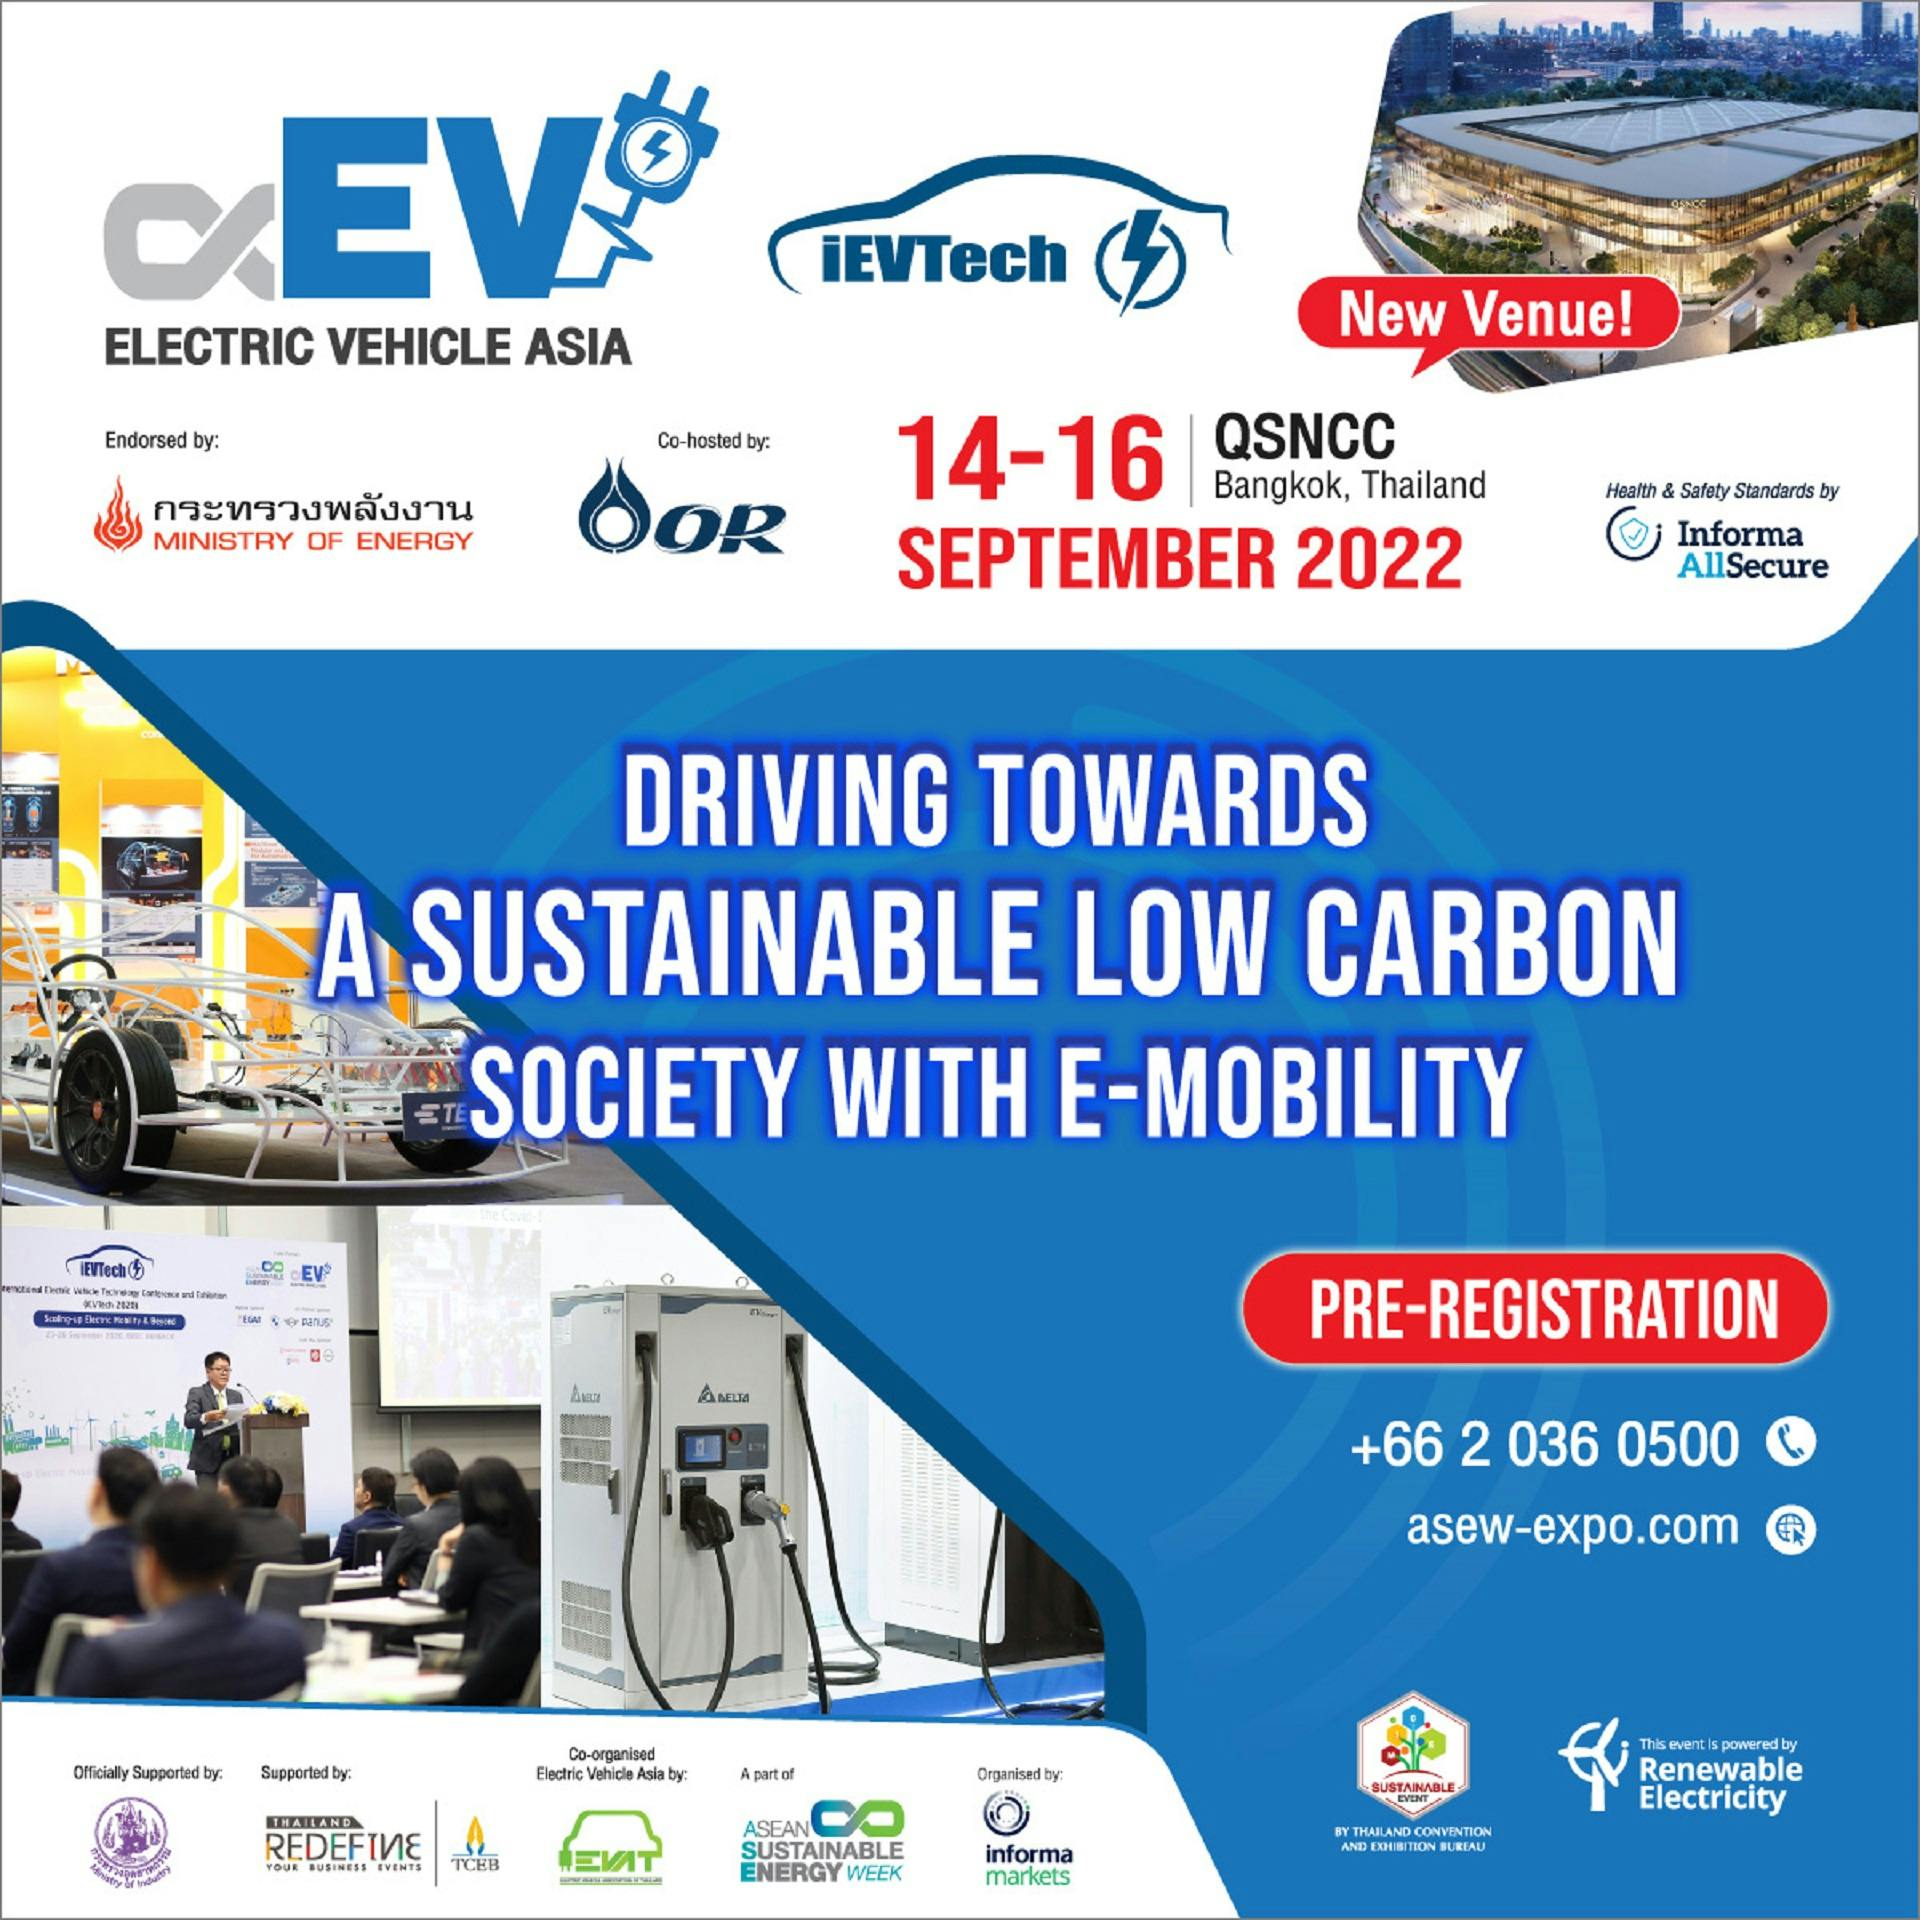 QSNCC Electric Vehicle Asia (EVA) 2022